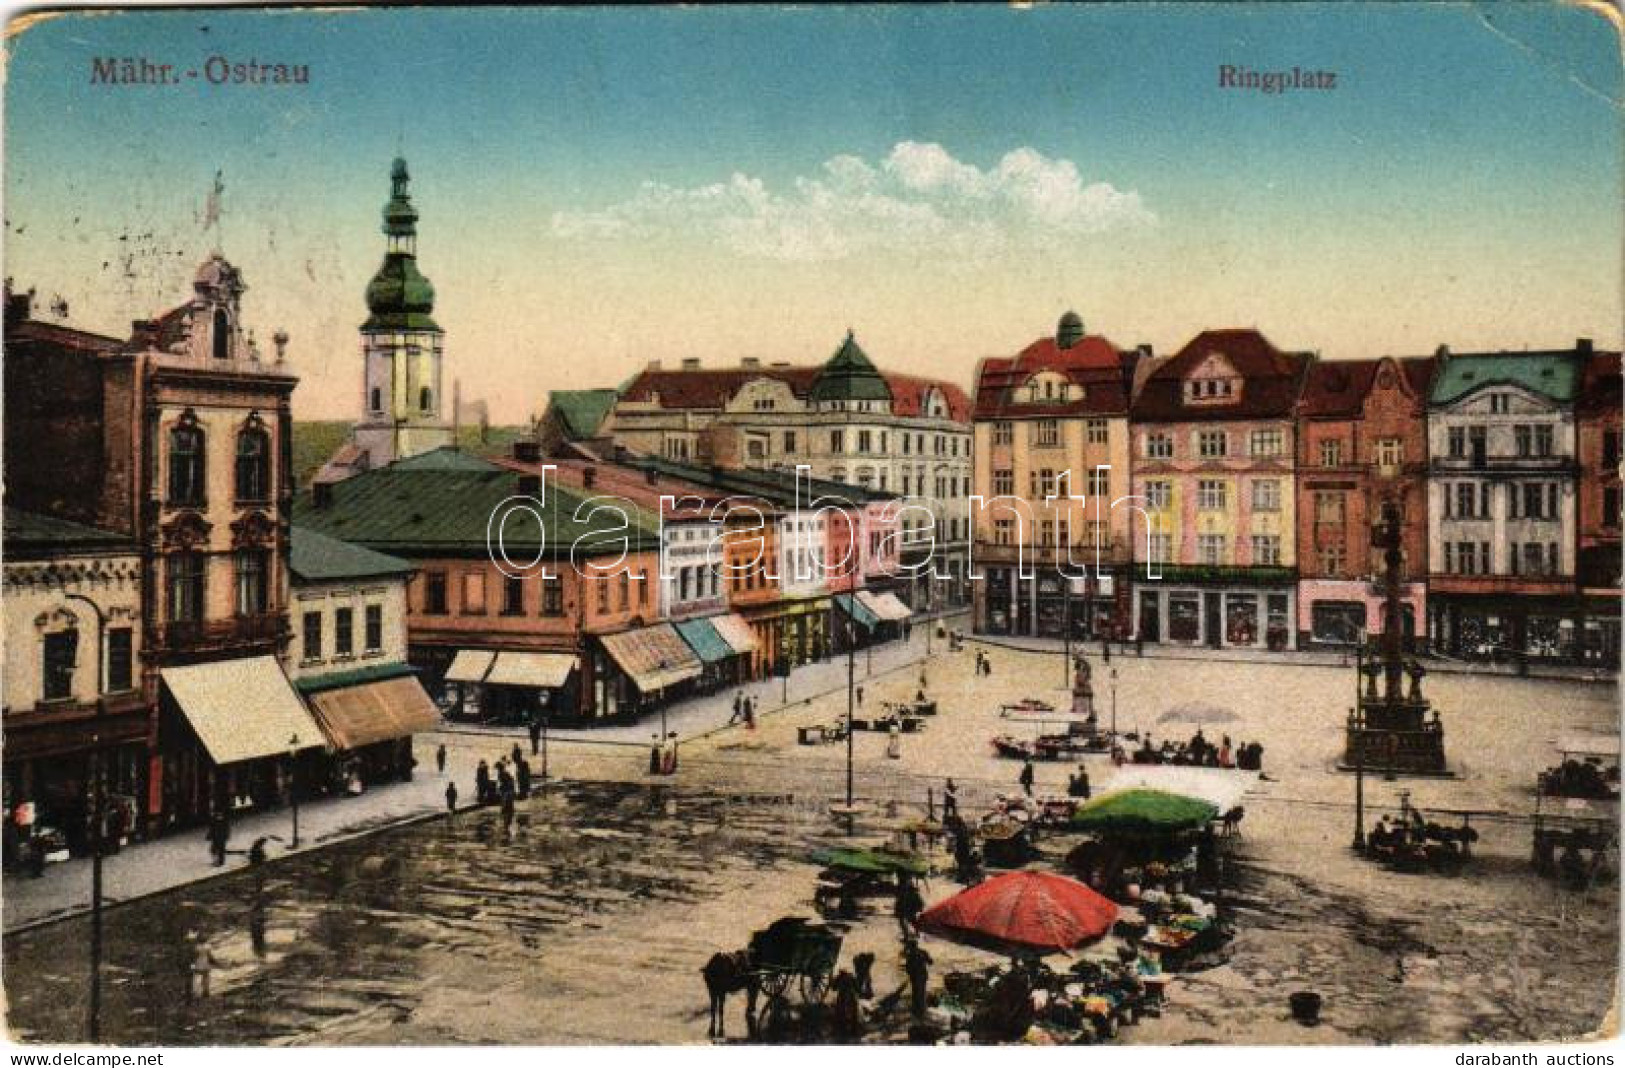 T2/T3 1917 Ostrava, Moravská Ostrava, Mährisch Ostrau; Ringplatz / Square, Market, Shops (EK) - Ohne Zuordnung